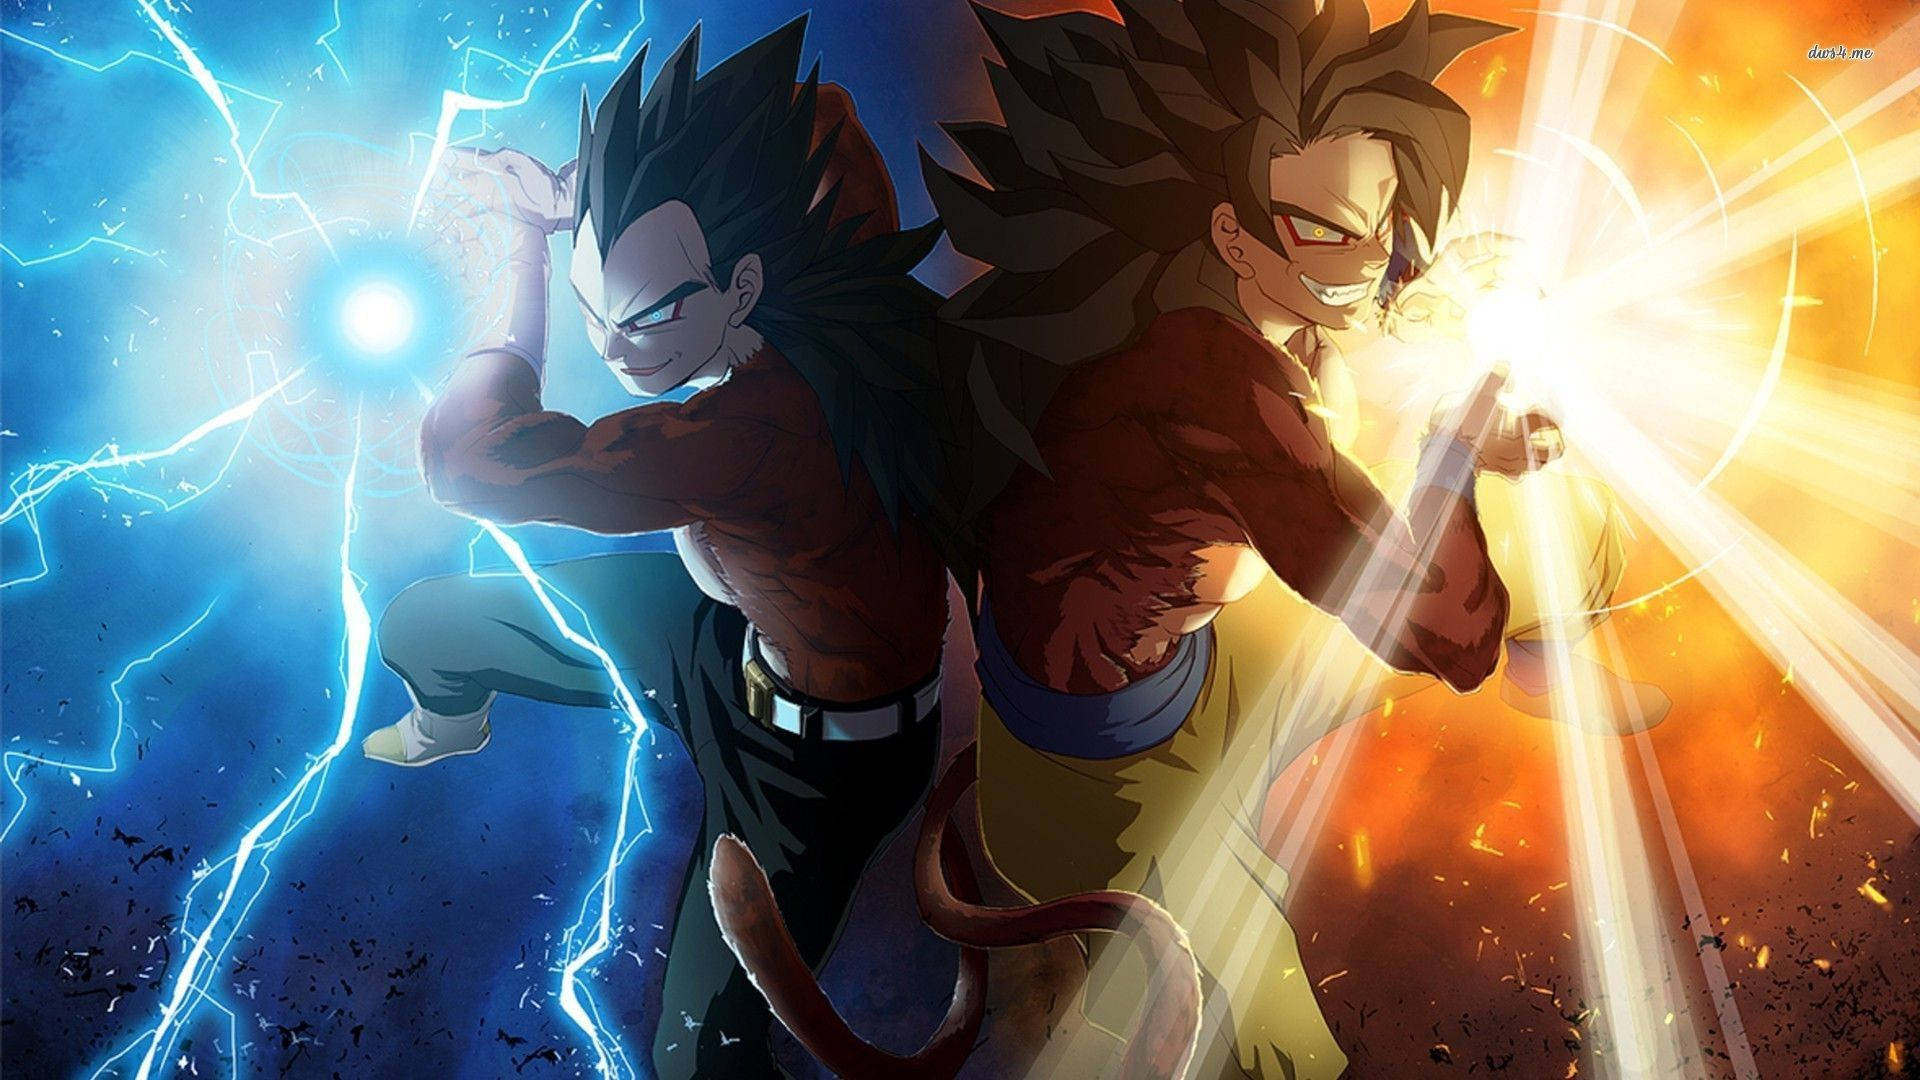 Super Saiyan 4 Powers of Goku&Vegeta Wallpaper